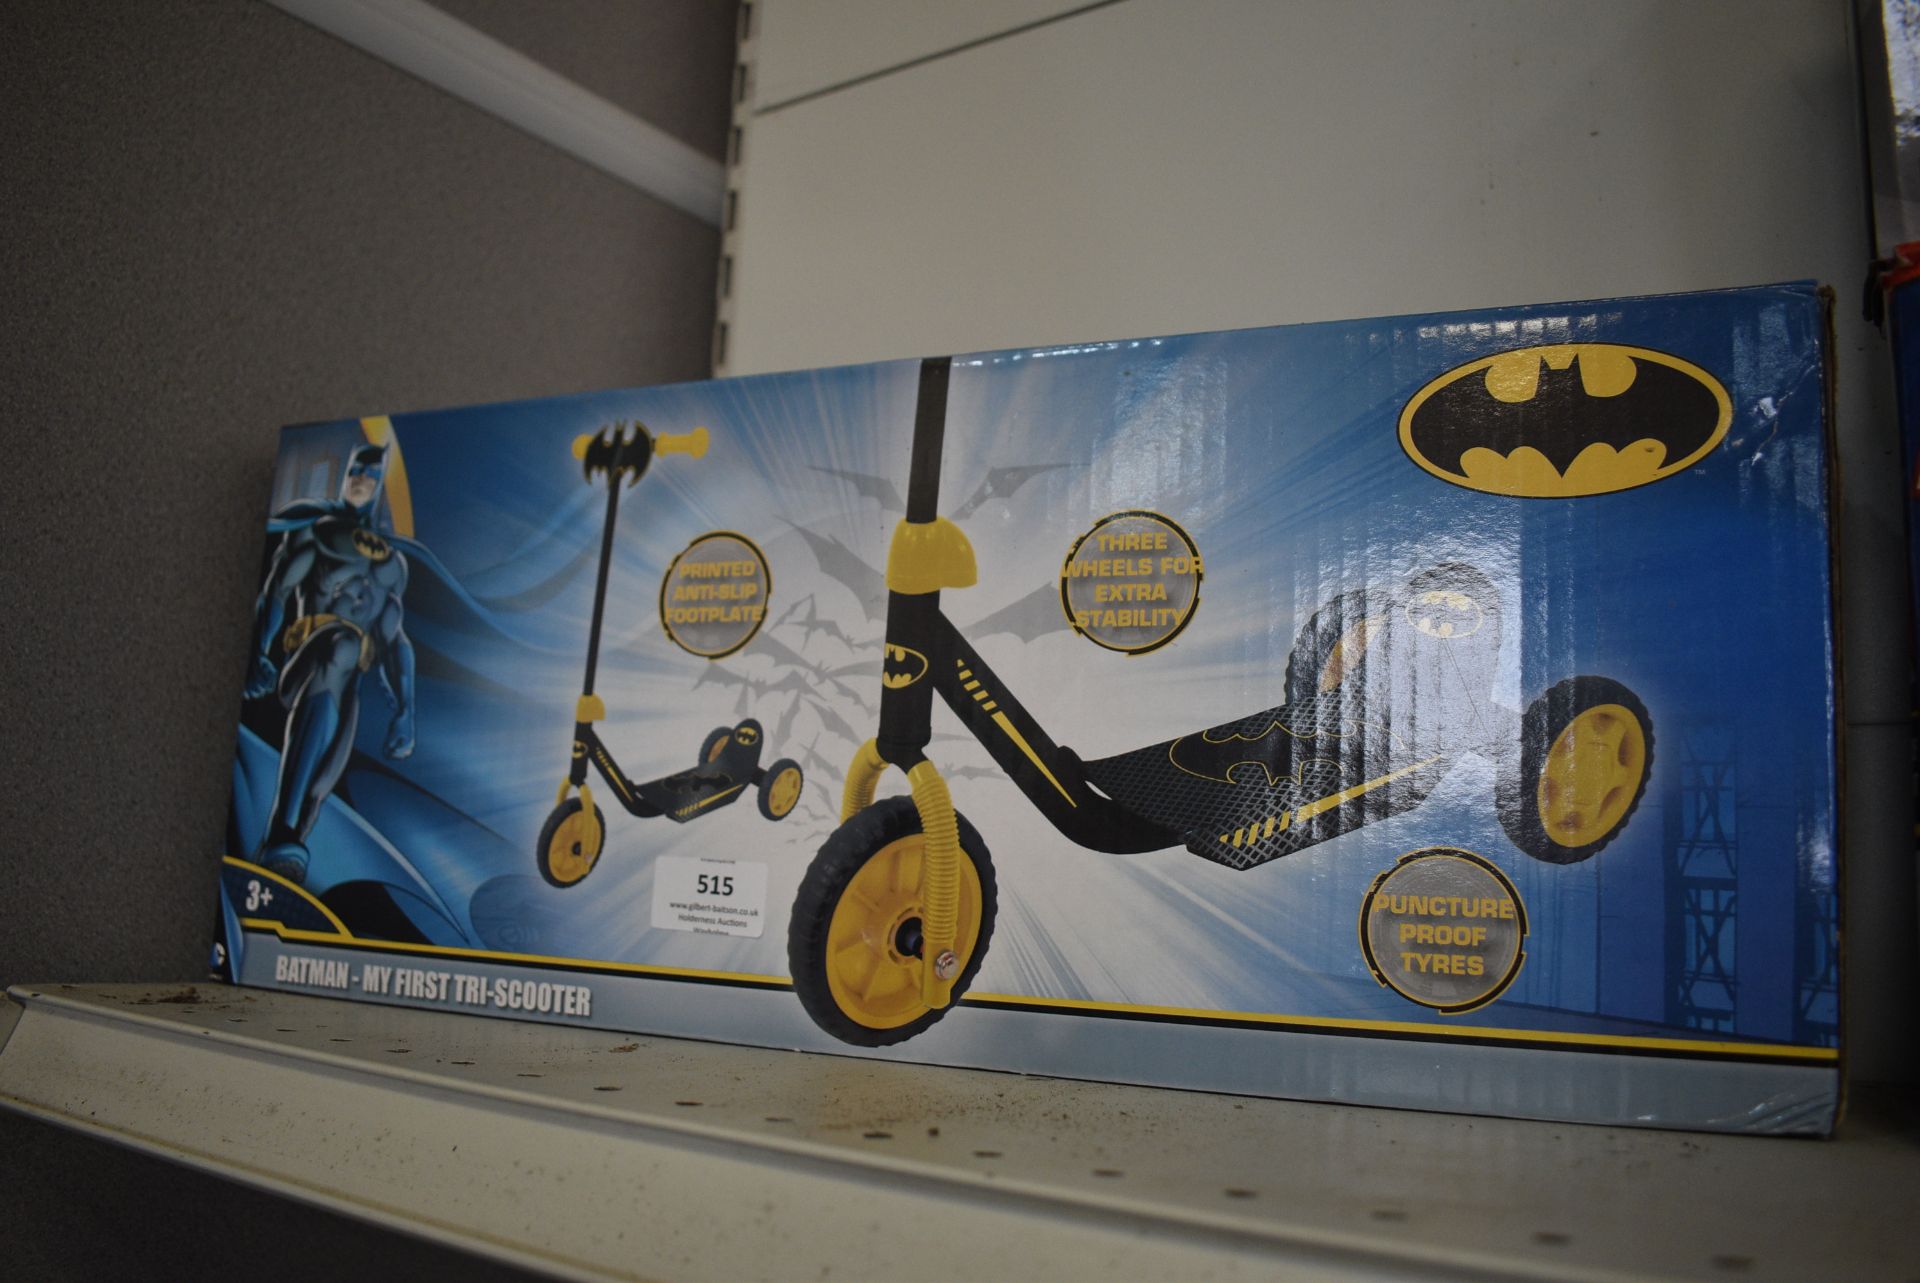 Batman Tri-Scooter